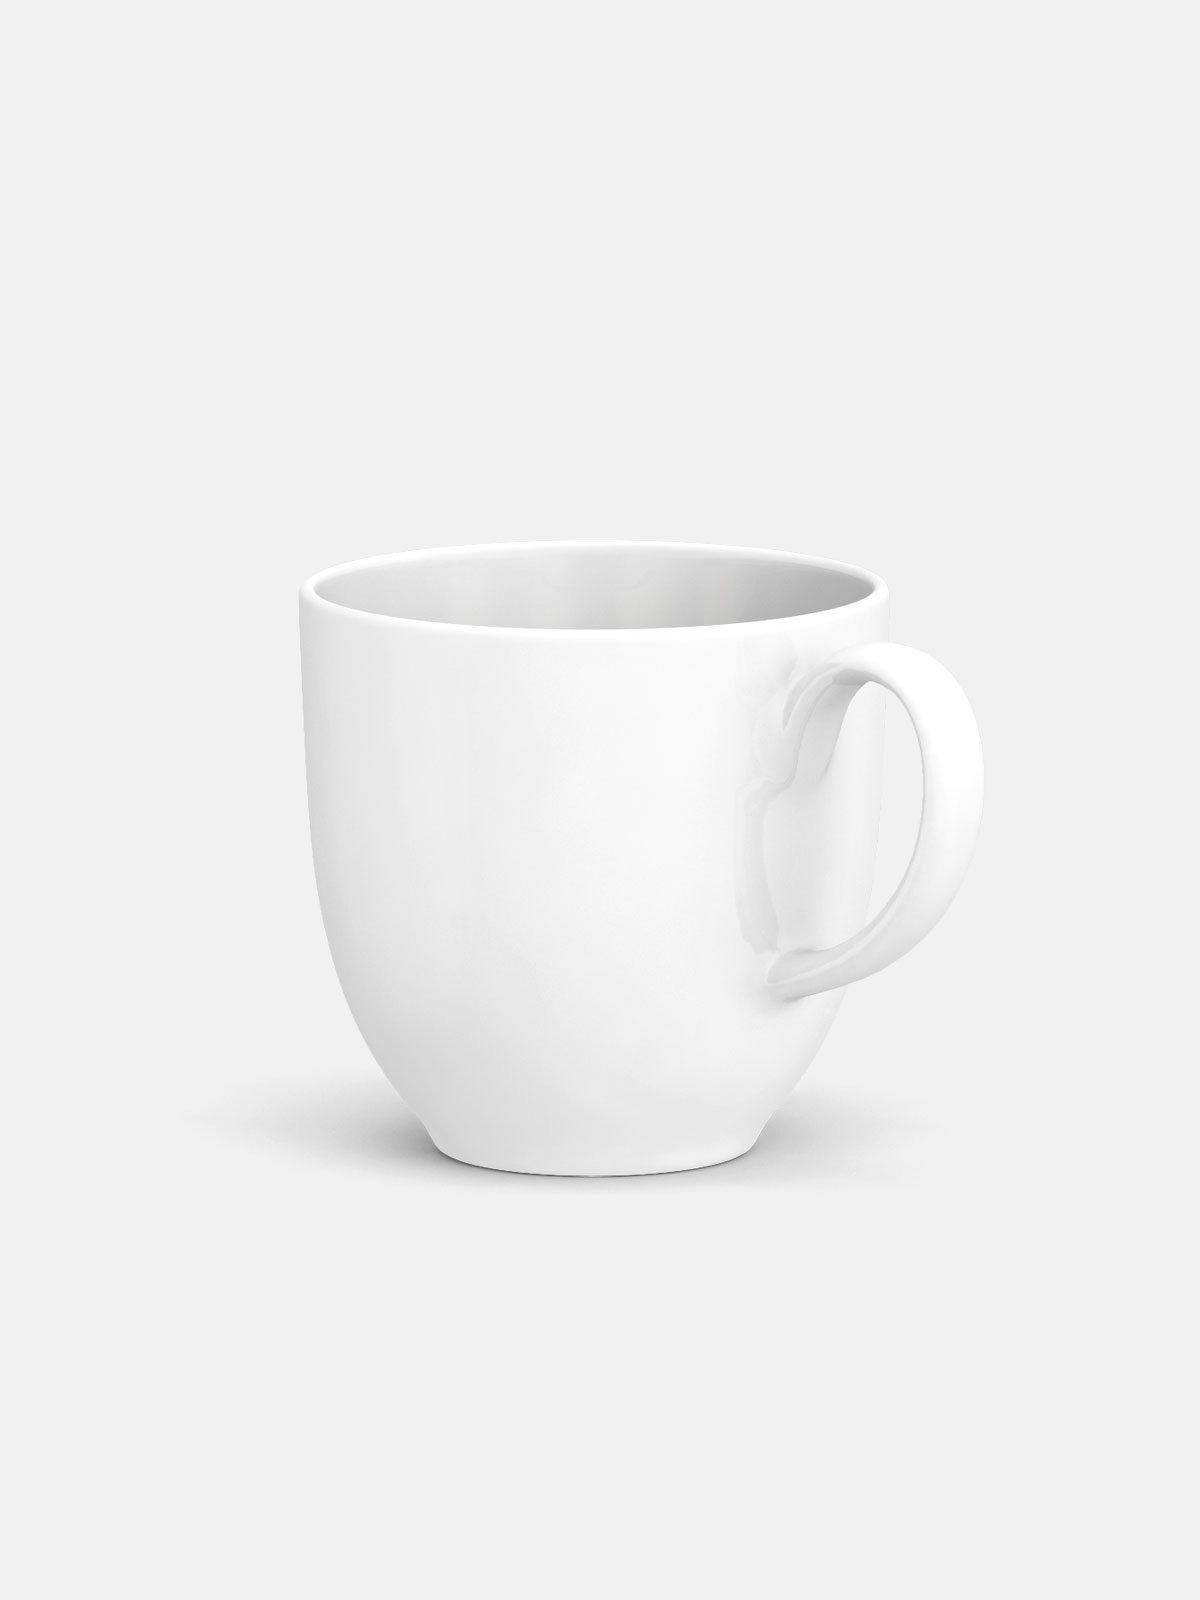 Small coffee cup - Phoenix Estudio